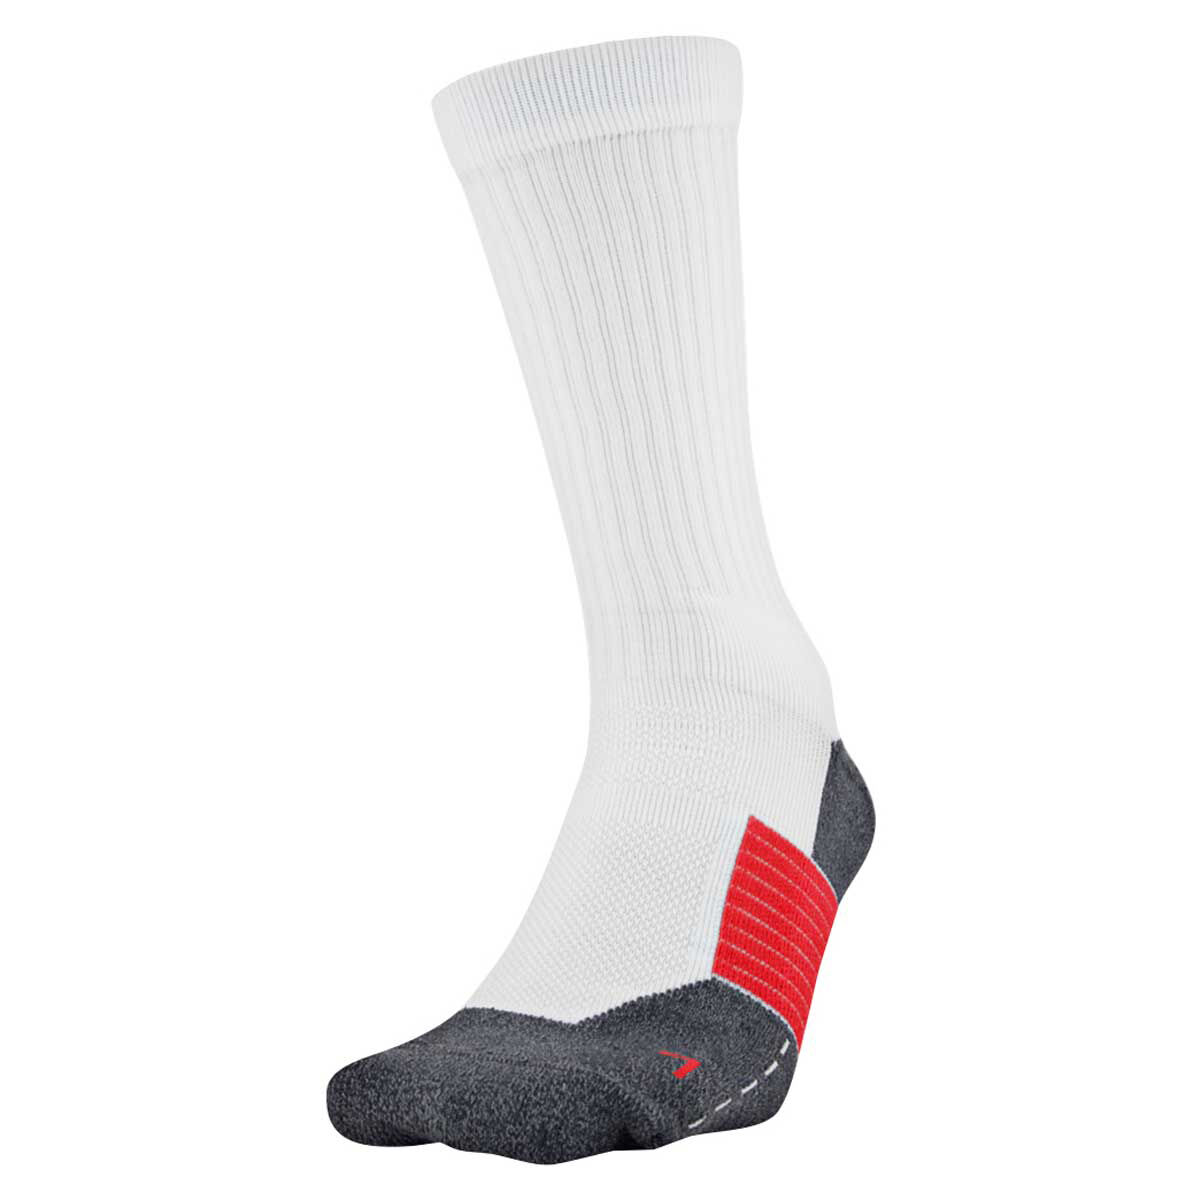 rebel sport adidas socks